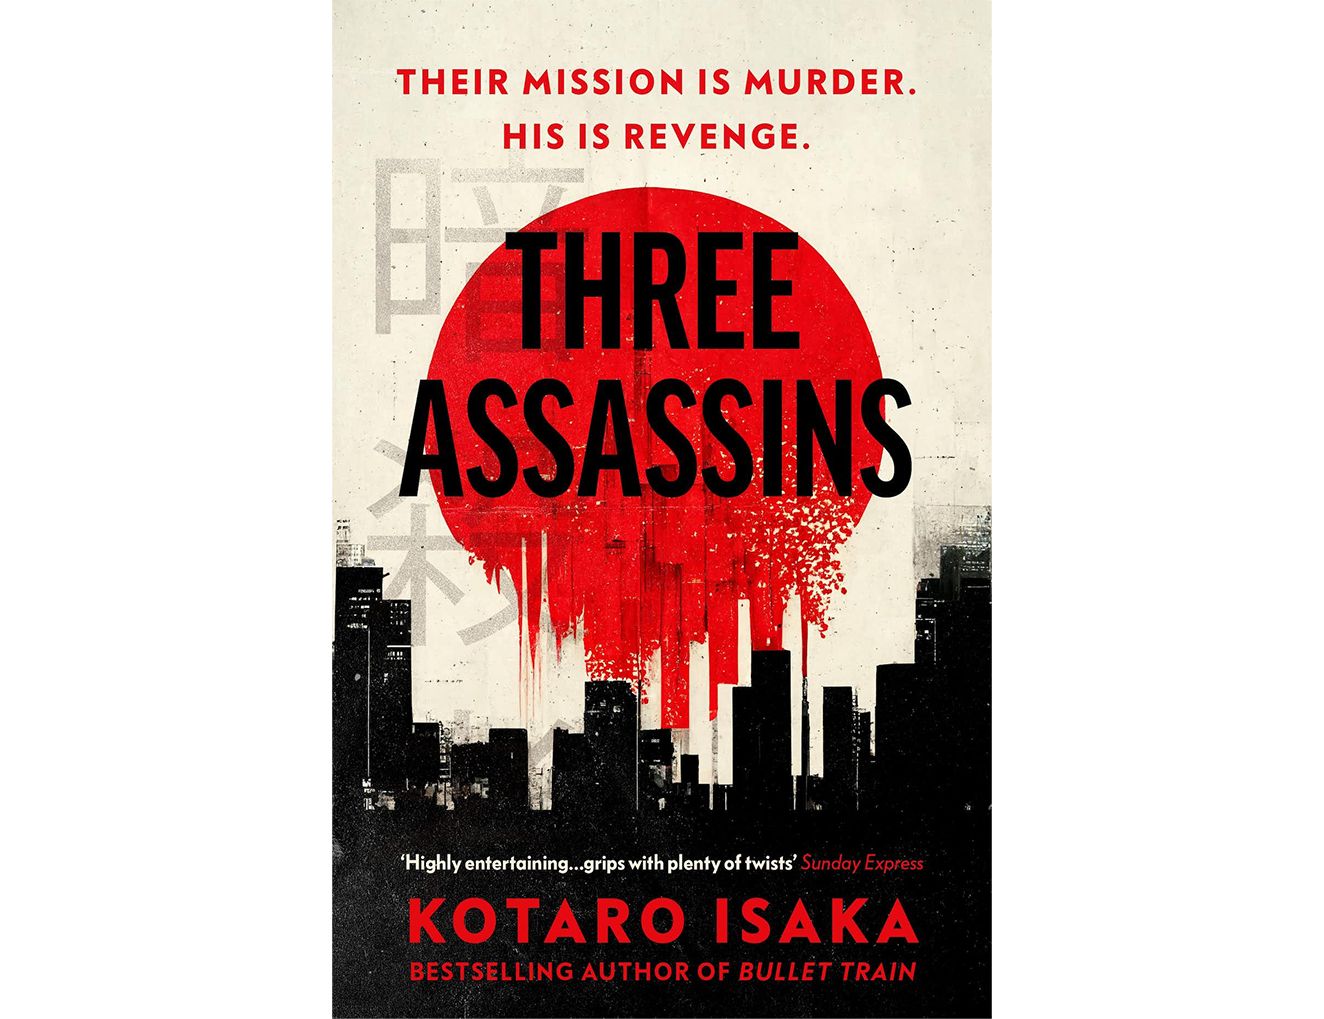 Three Assassins by Kotaro Isaka